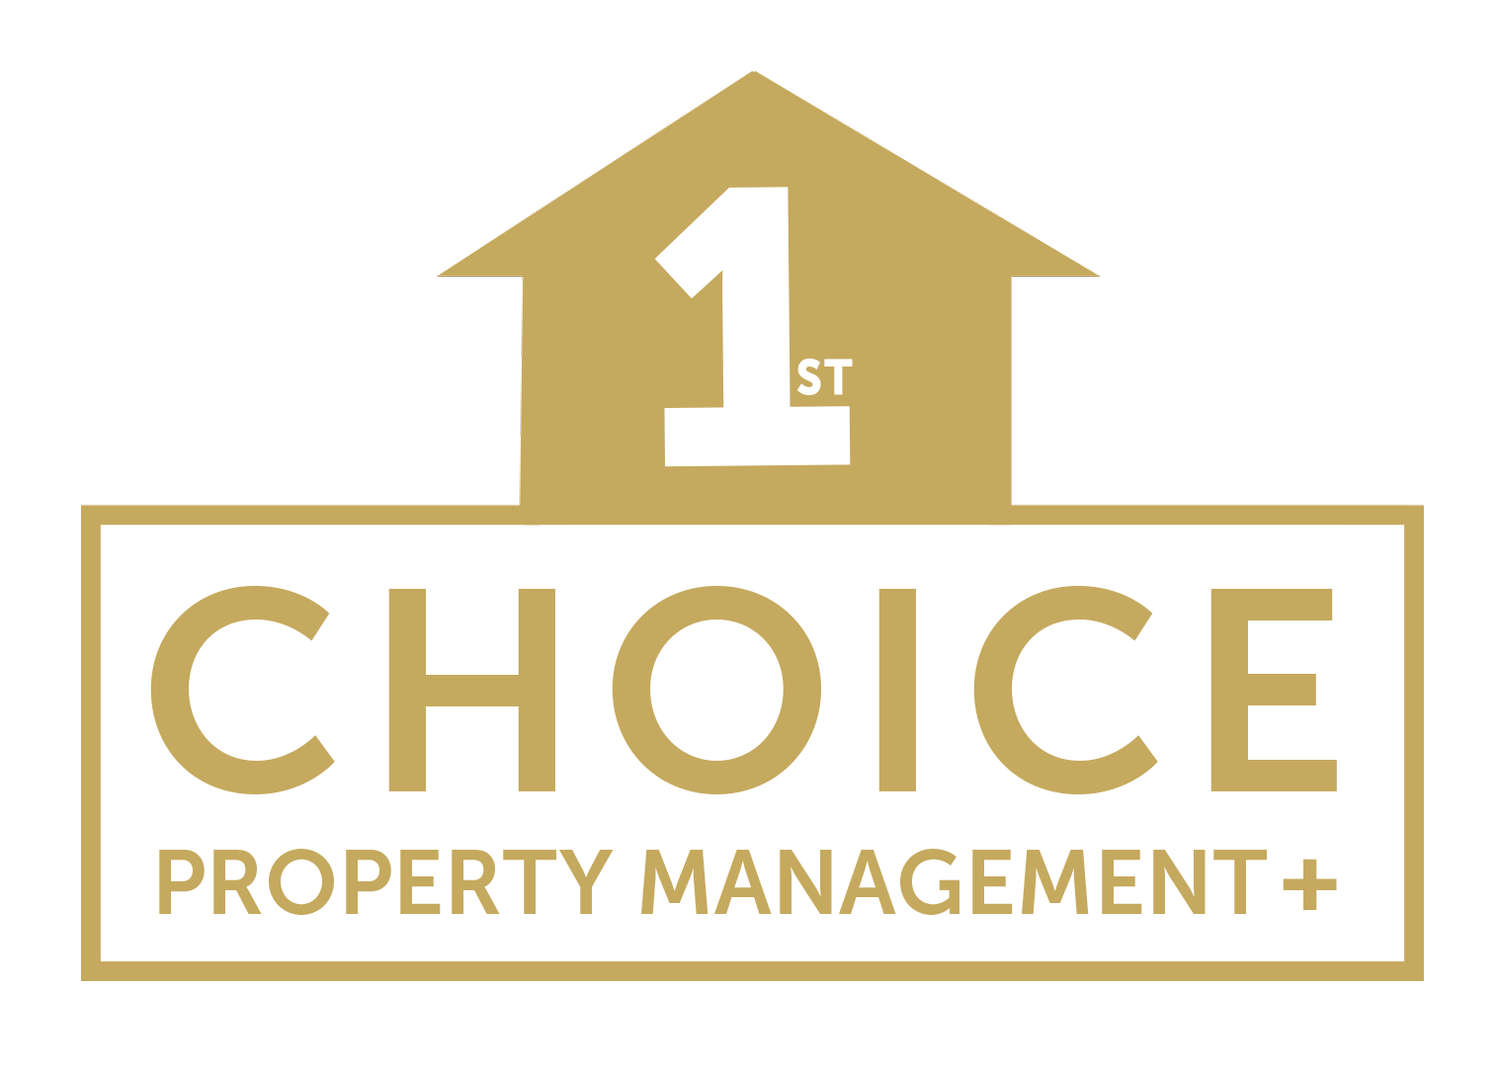 1st Choice Property Management +